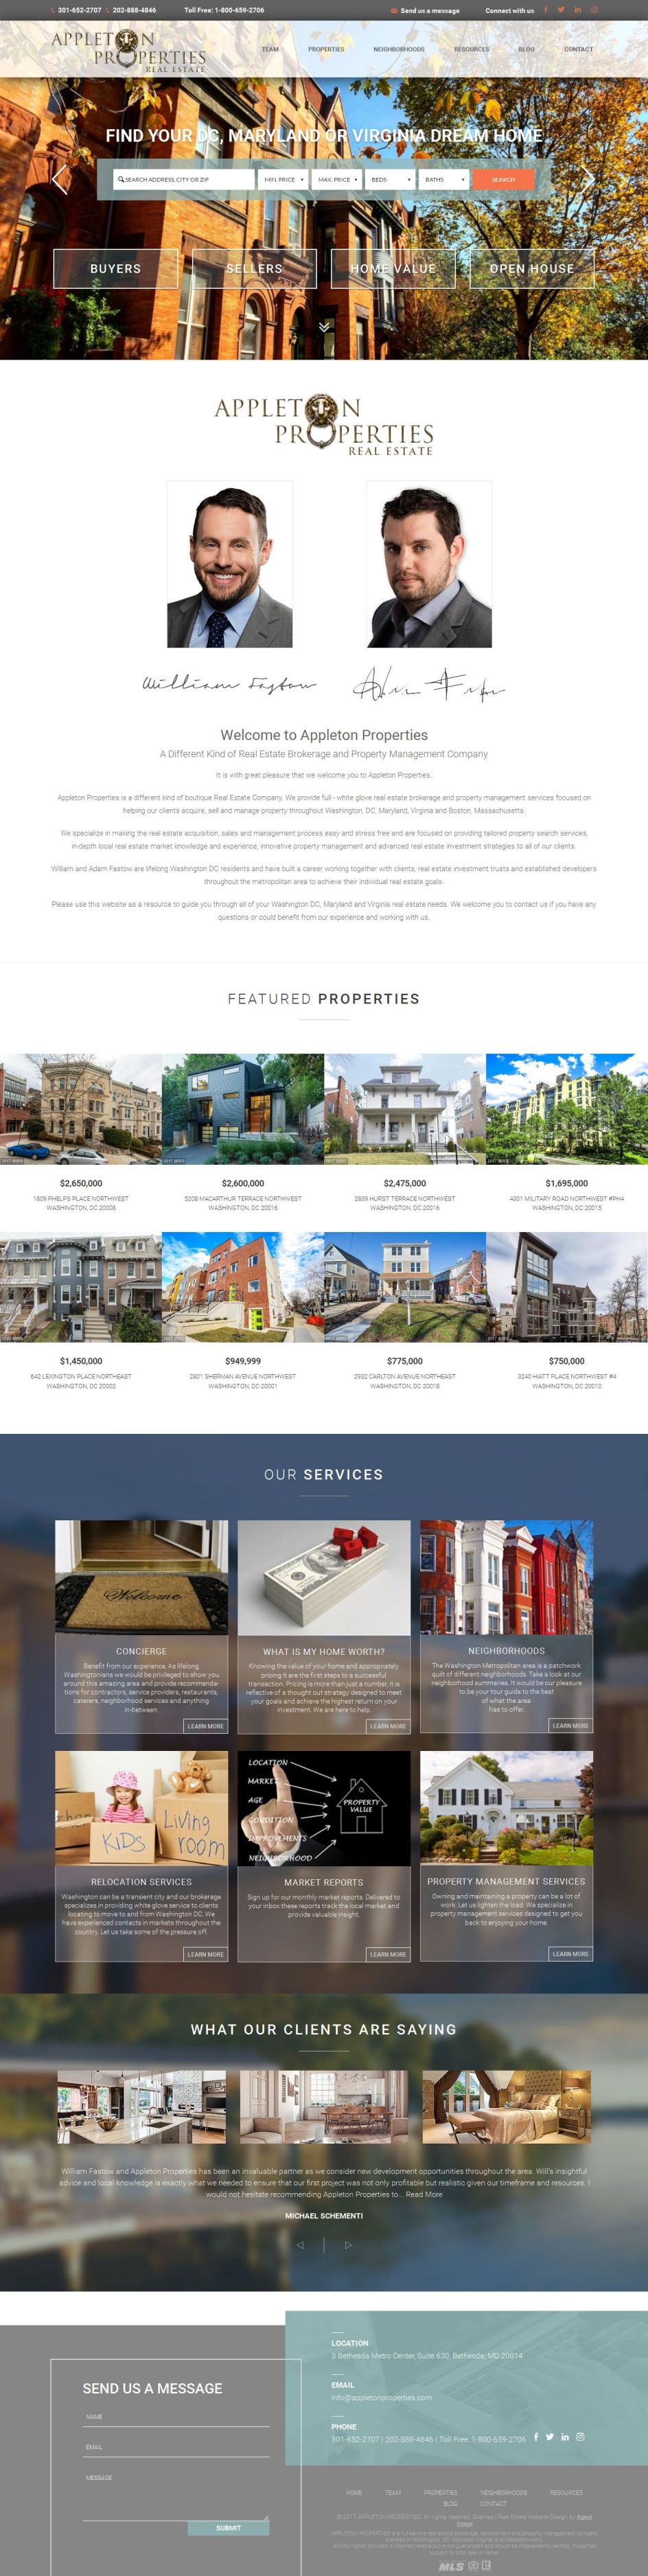 William & Adam Fastow, Appleton Properties - appletonproperties.com